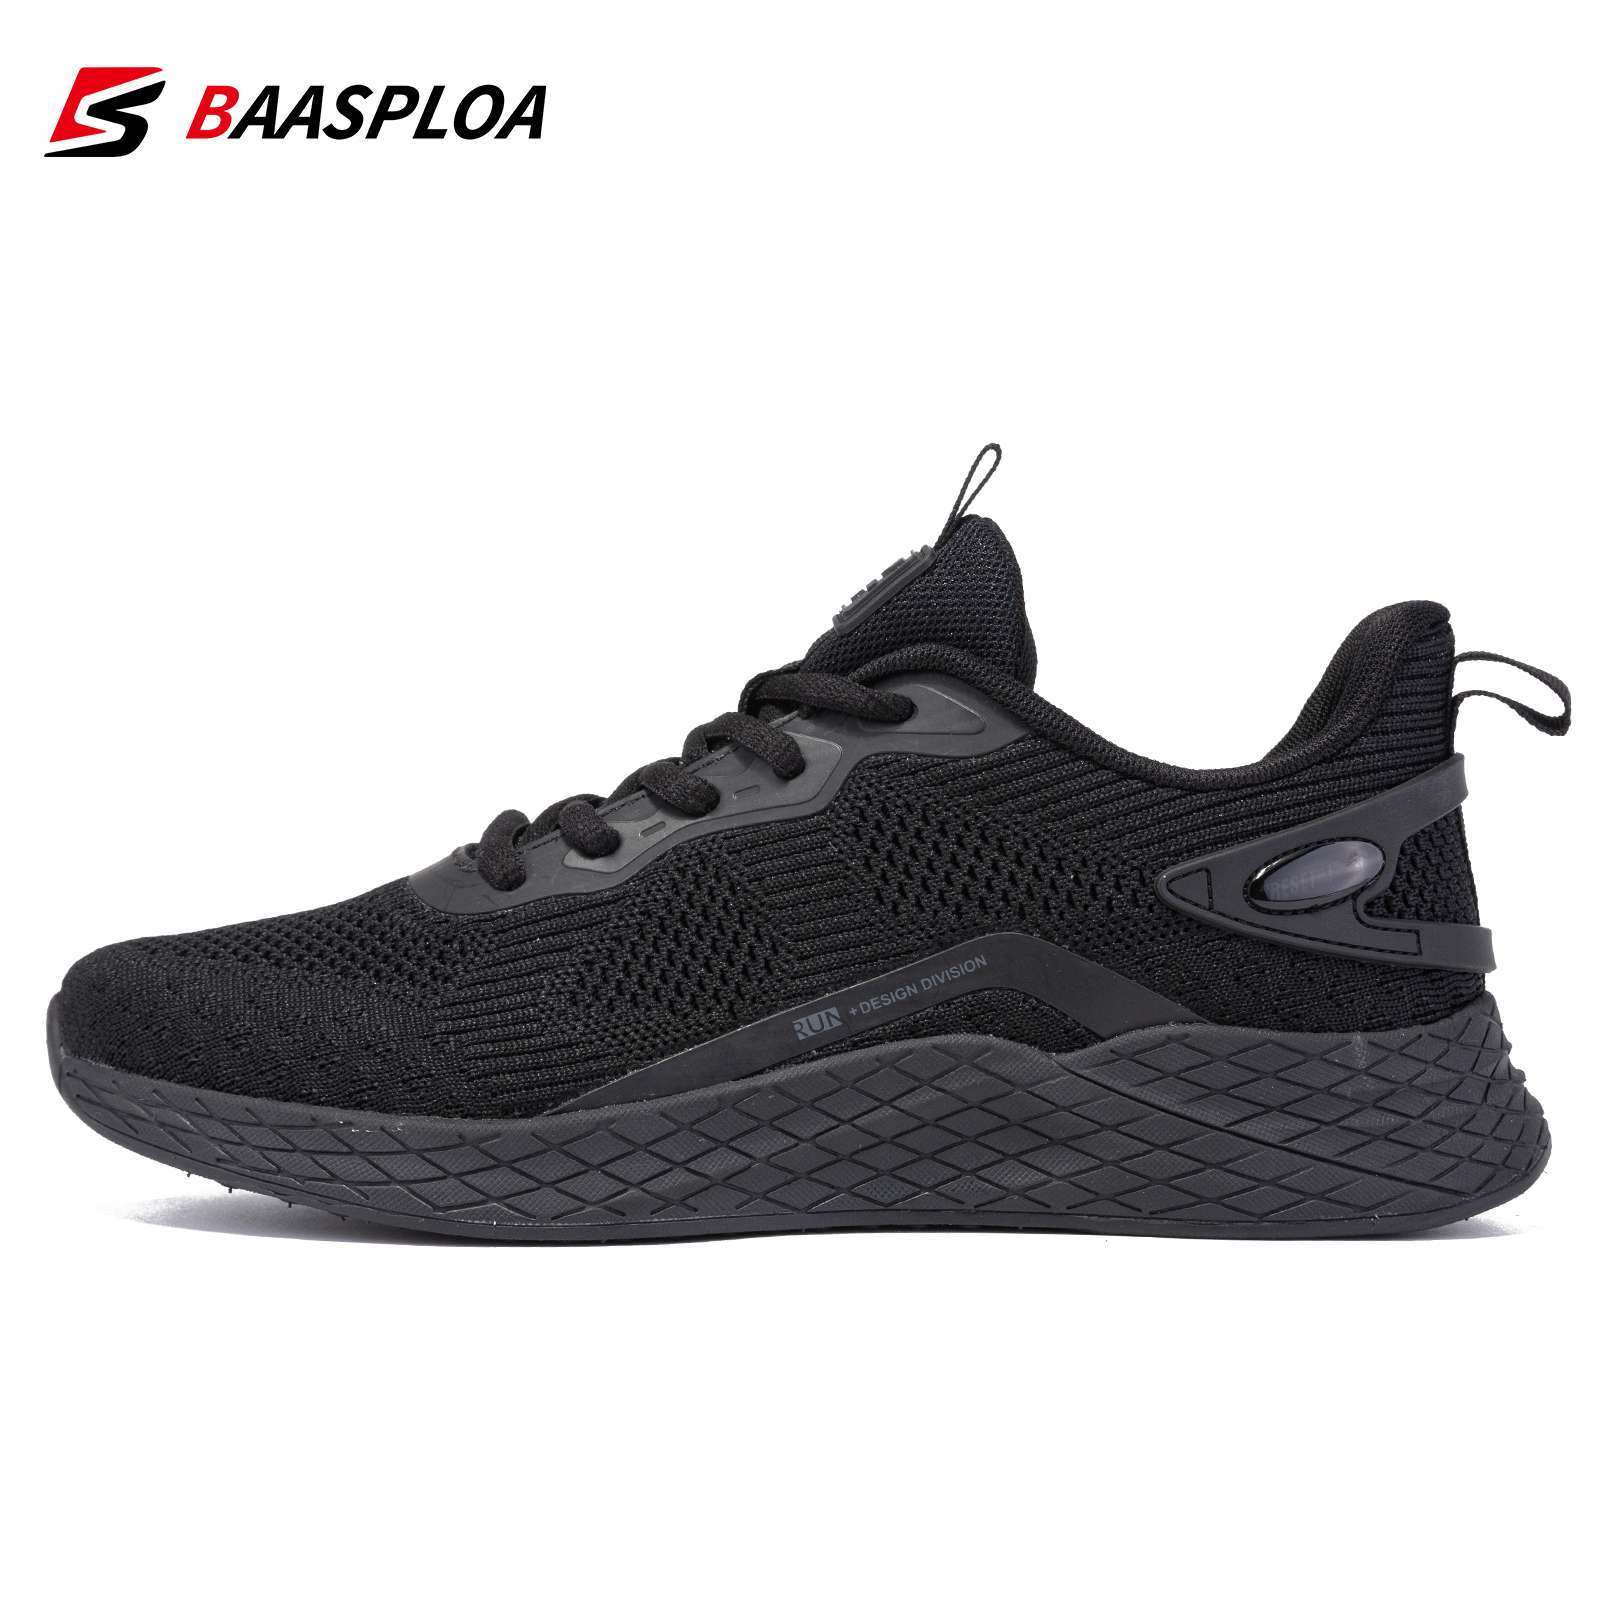 Baasploa Sneakers New Fashion Men Sneakers Breathable Walking Shoes Comfortable Anti Slip Shock Absorbing Knit Male 2